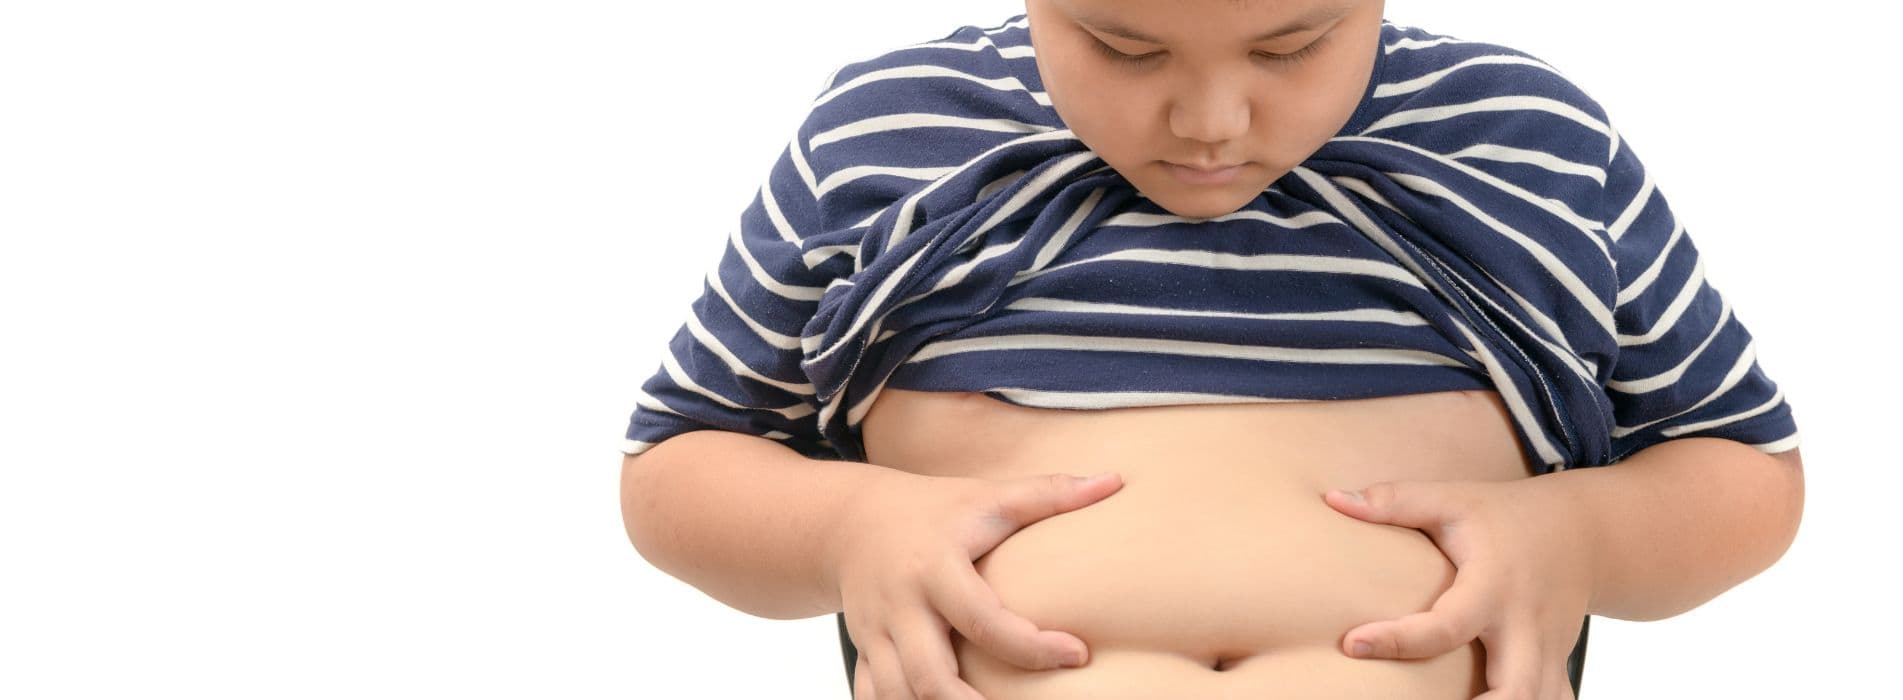 Obesity among adolescents